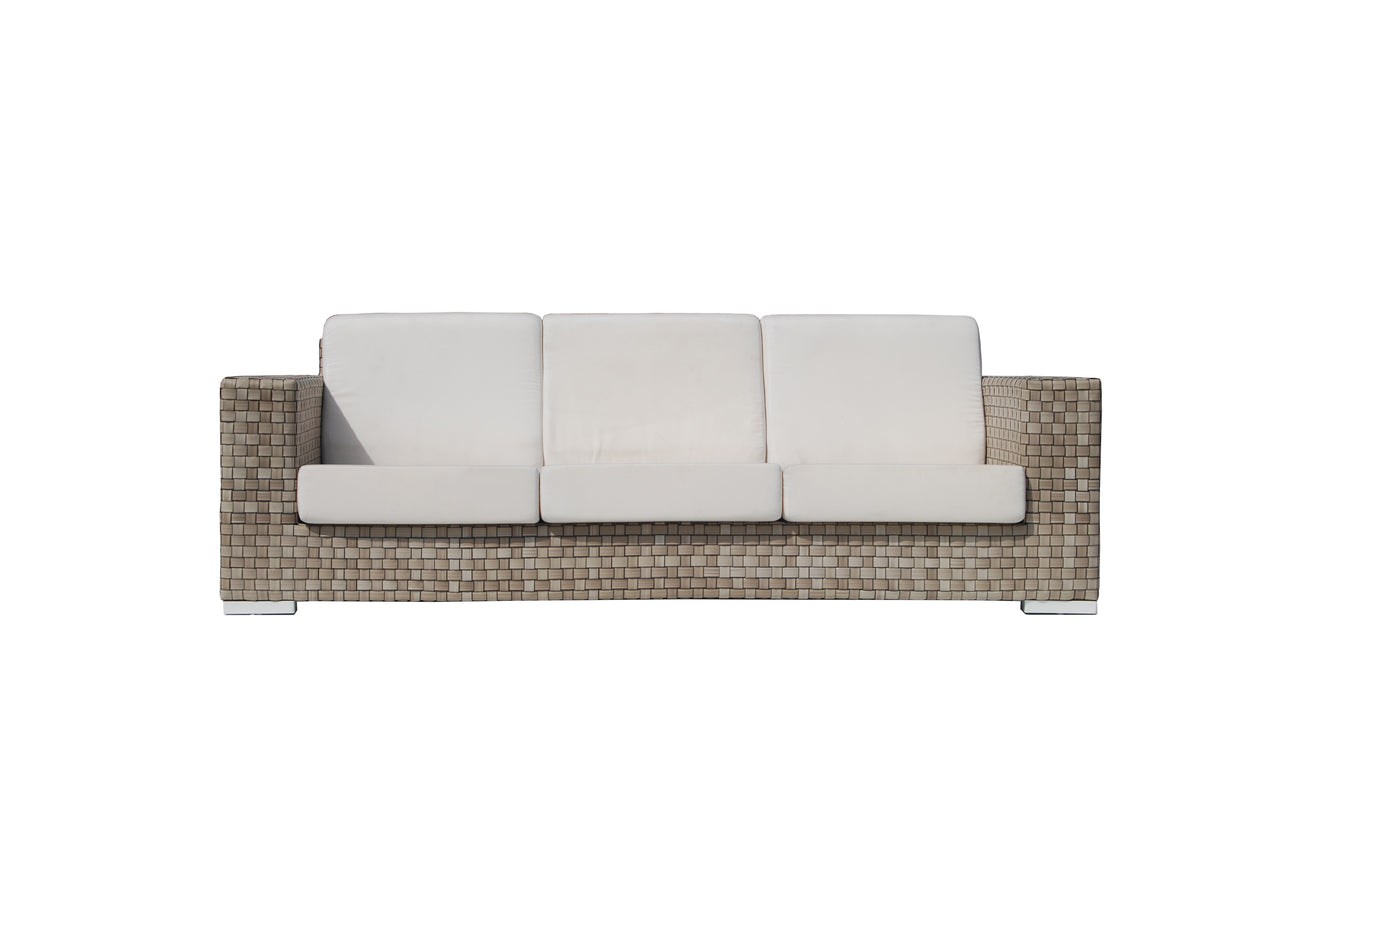 Brando sofa by Skyline Design